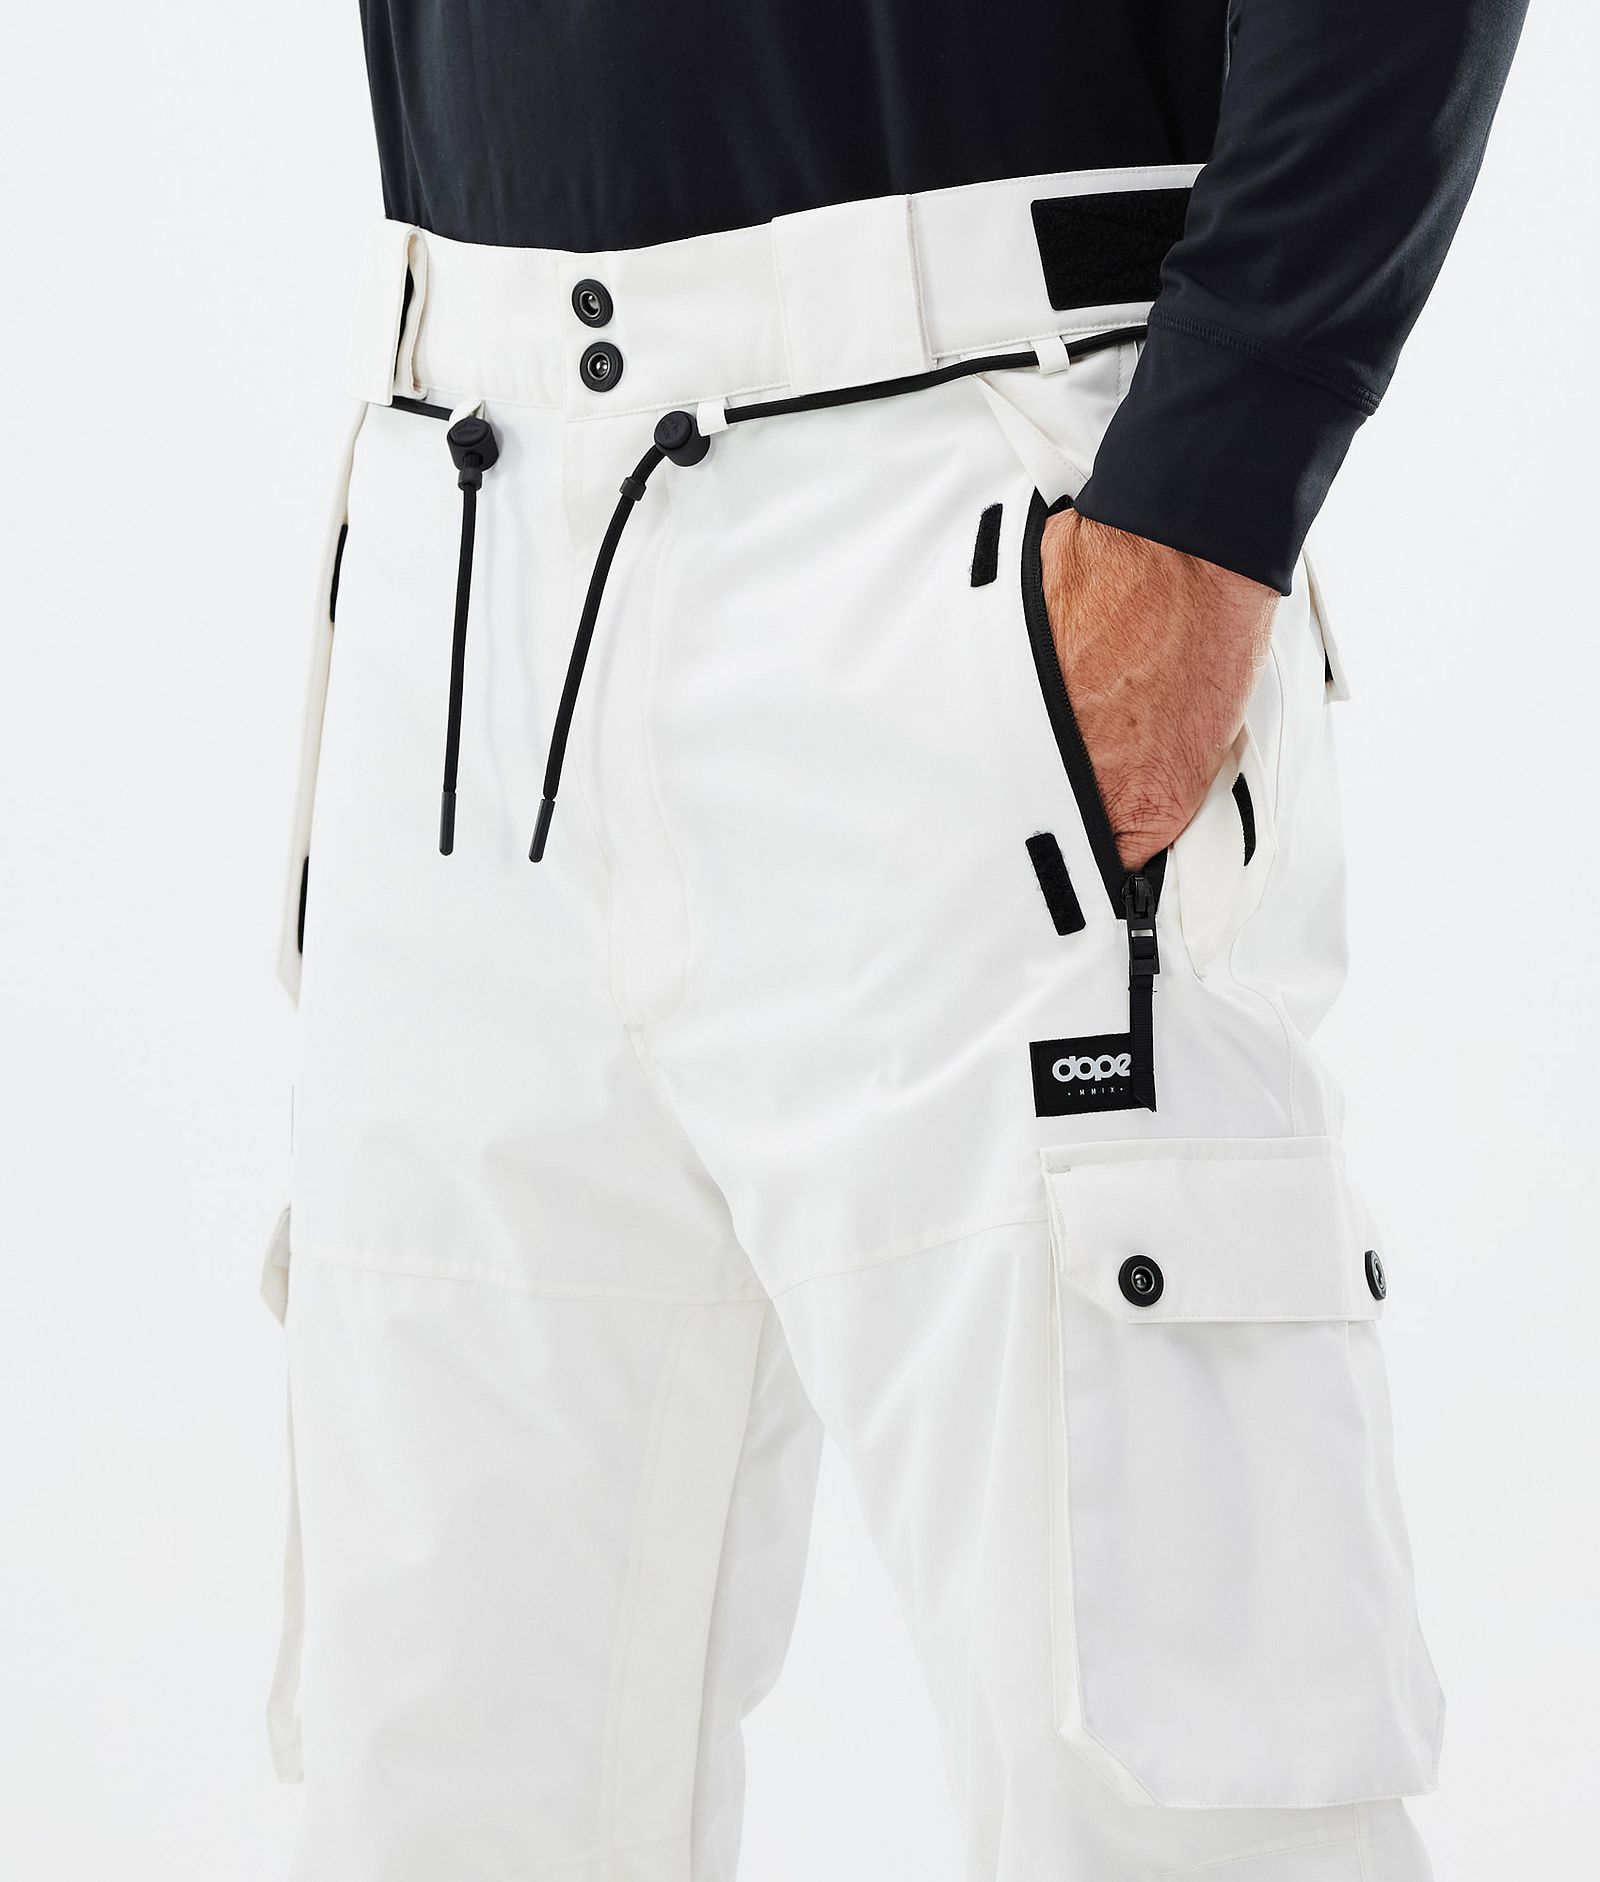 White Shield Ski Pants for Men